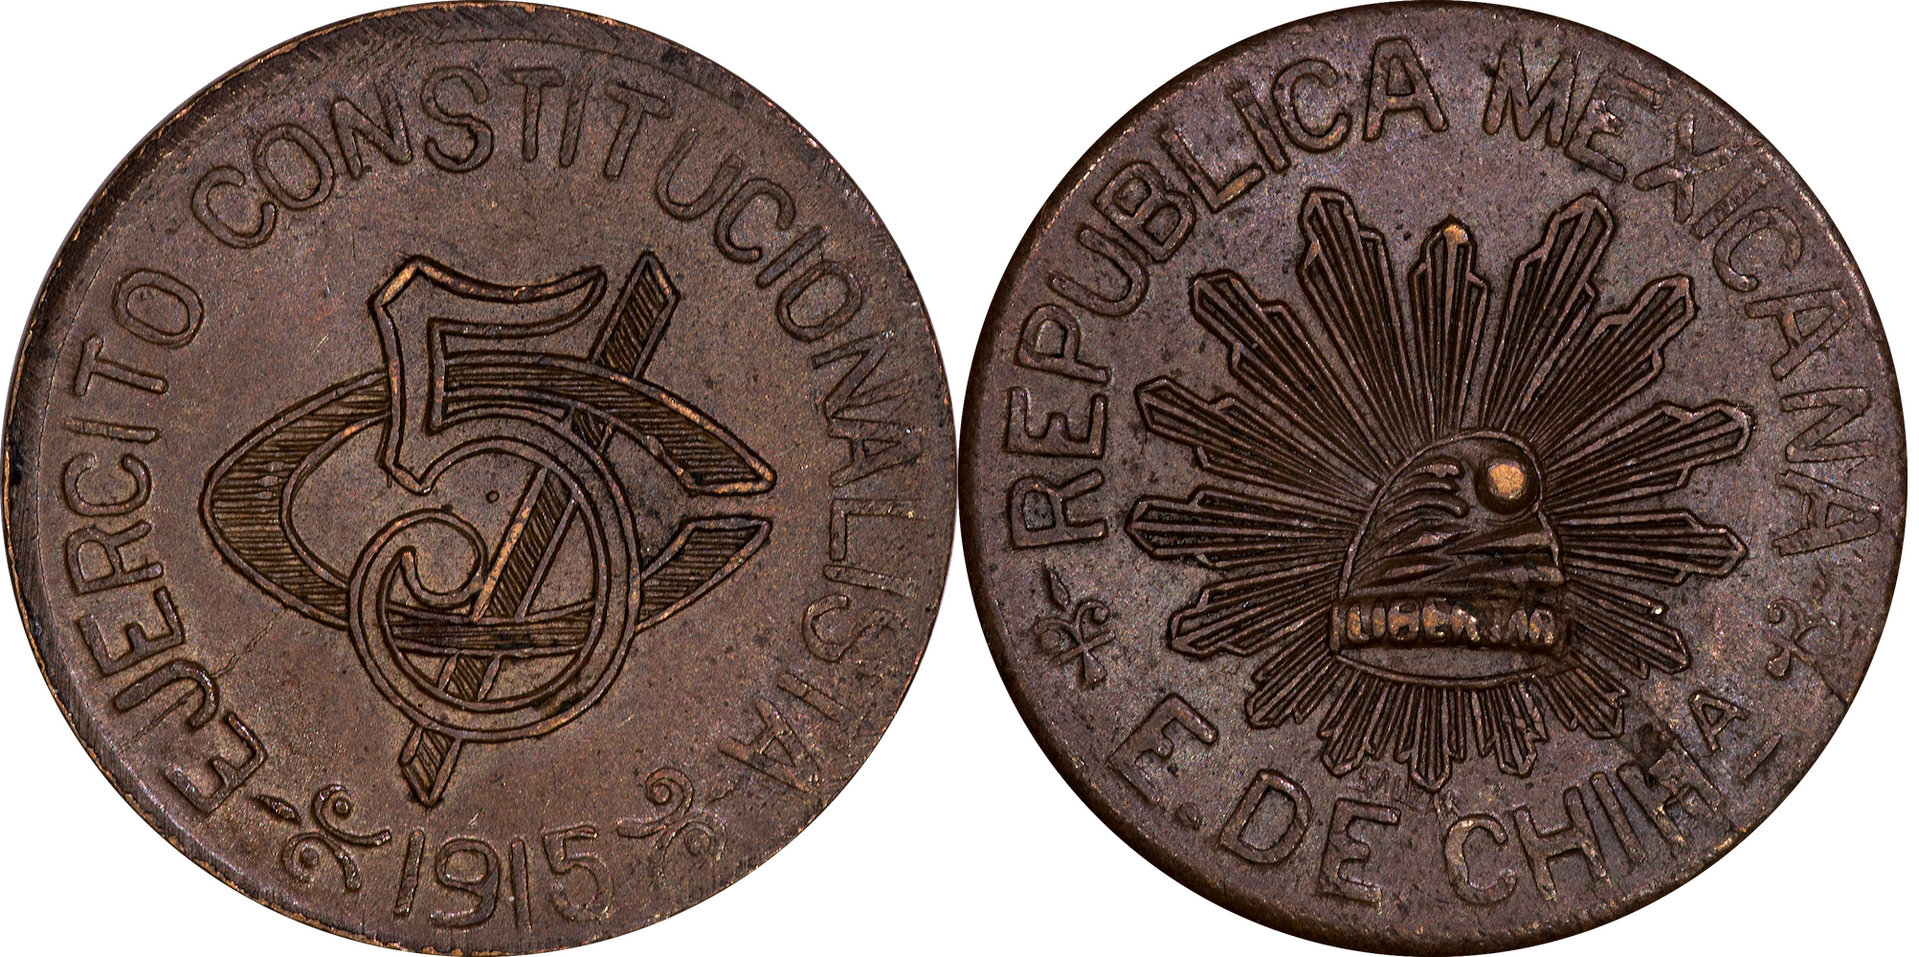 Mexico (Constitutionalist Army) - 1915 5 Centavos.jpg